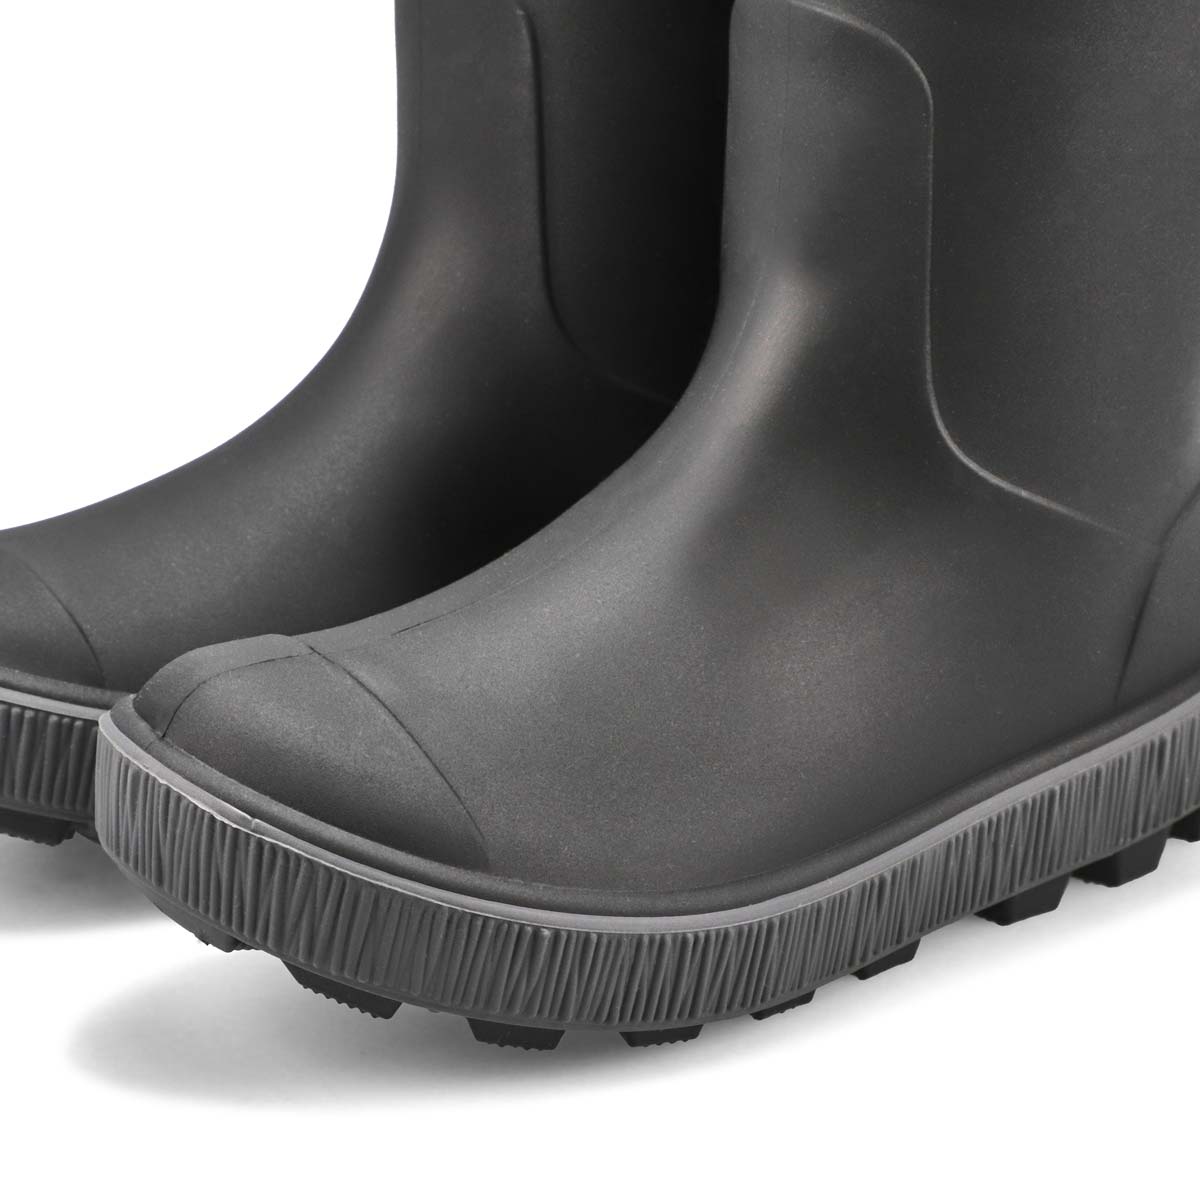 Boys' Riptide Waterproof Rain Boot - Blk/Charcoal